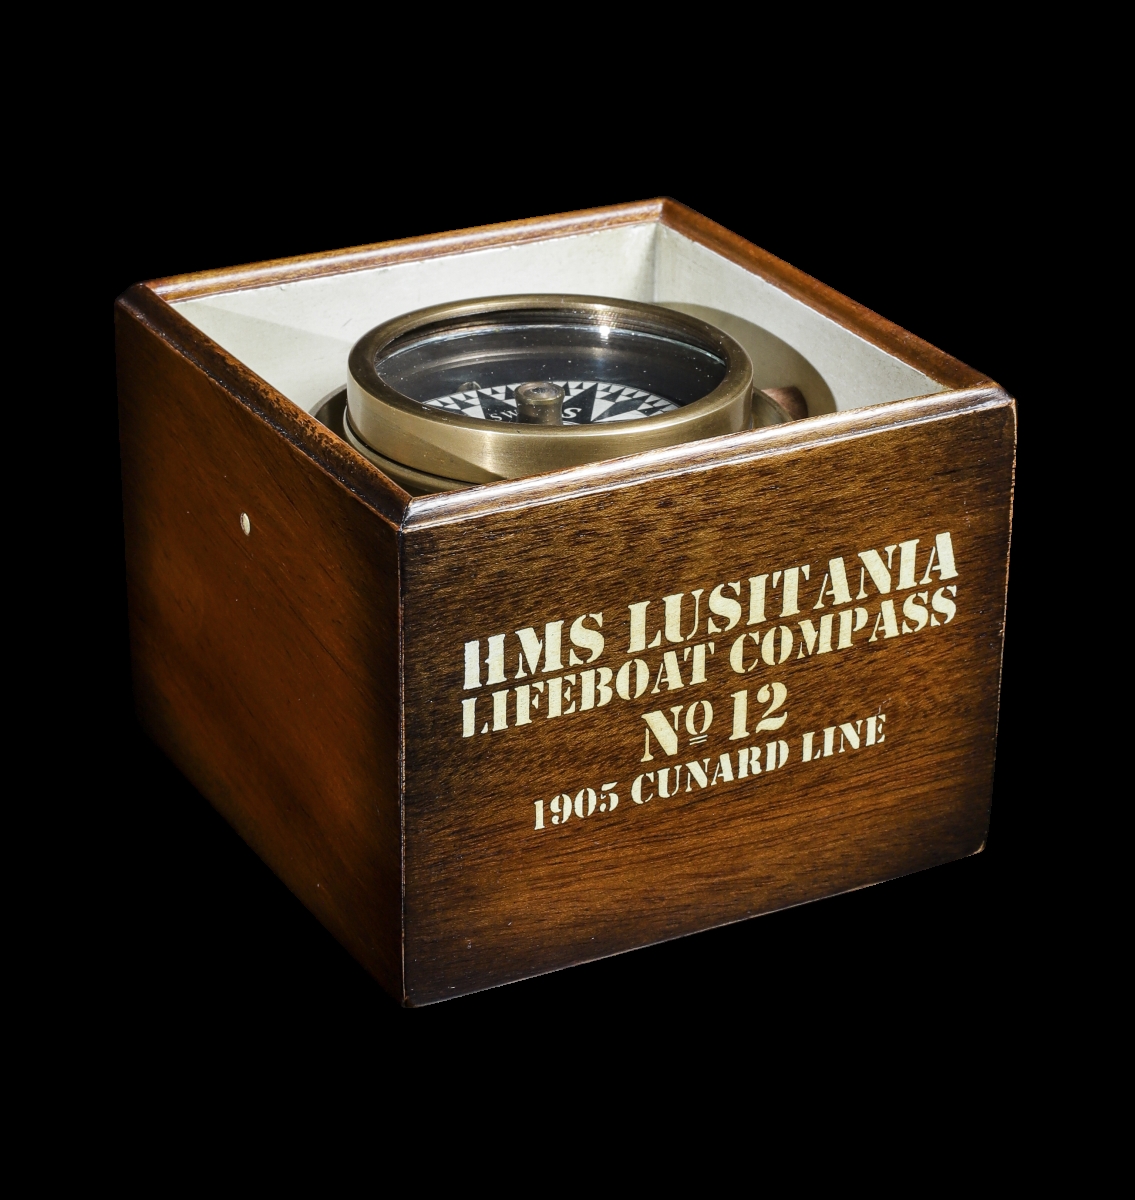 Picture of Tour dHorizon CS205 Lusitania Lifeboat Compass